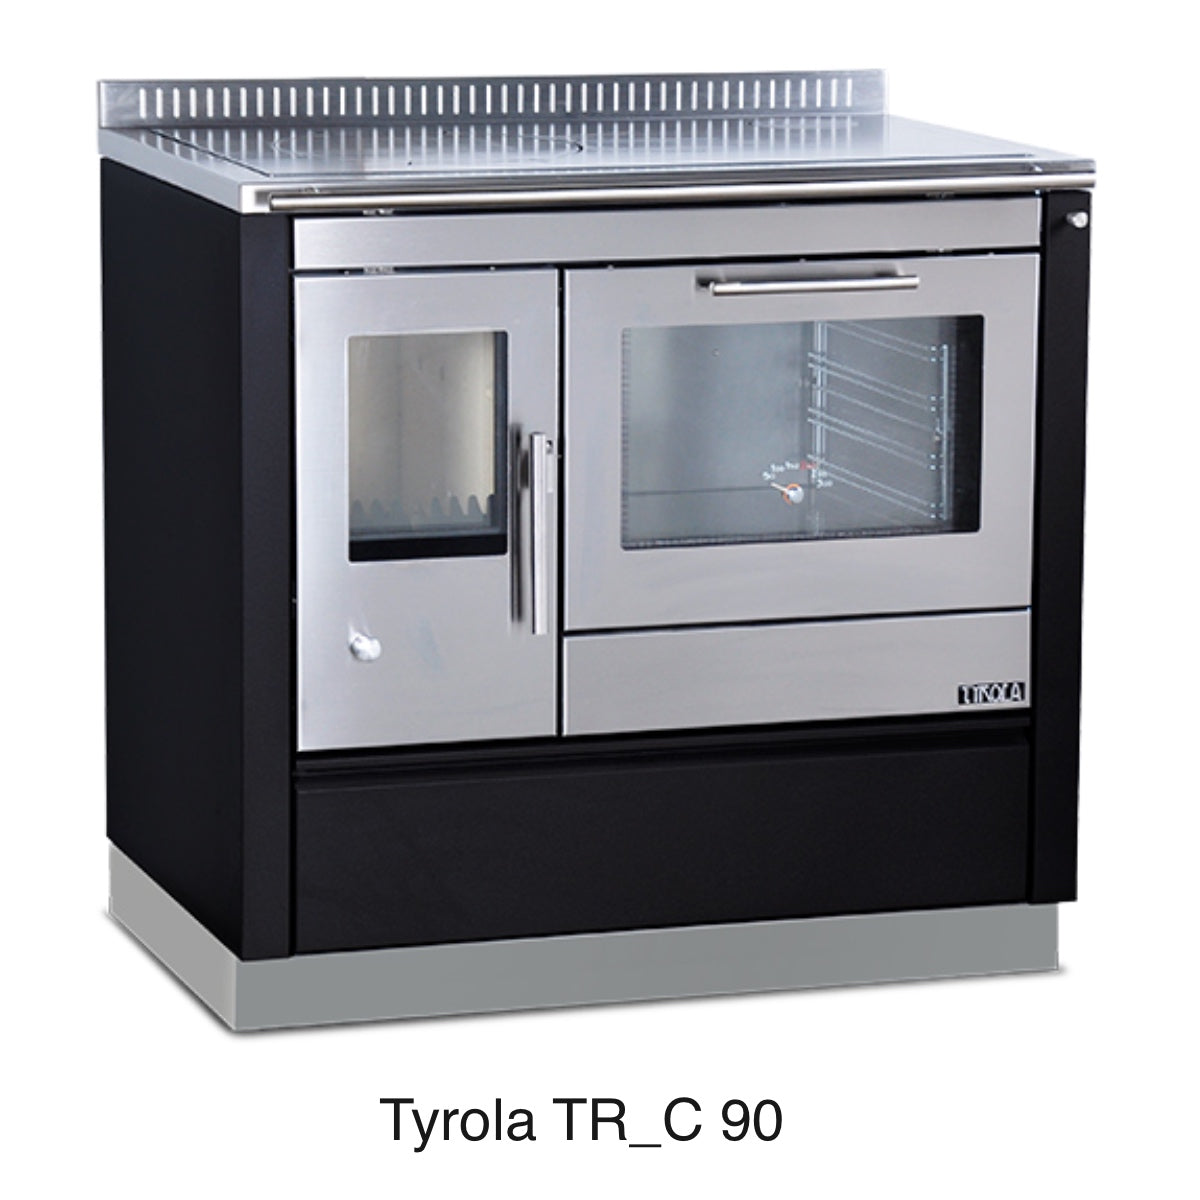 Tyrola TR C 90 